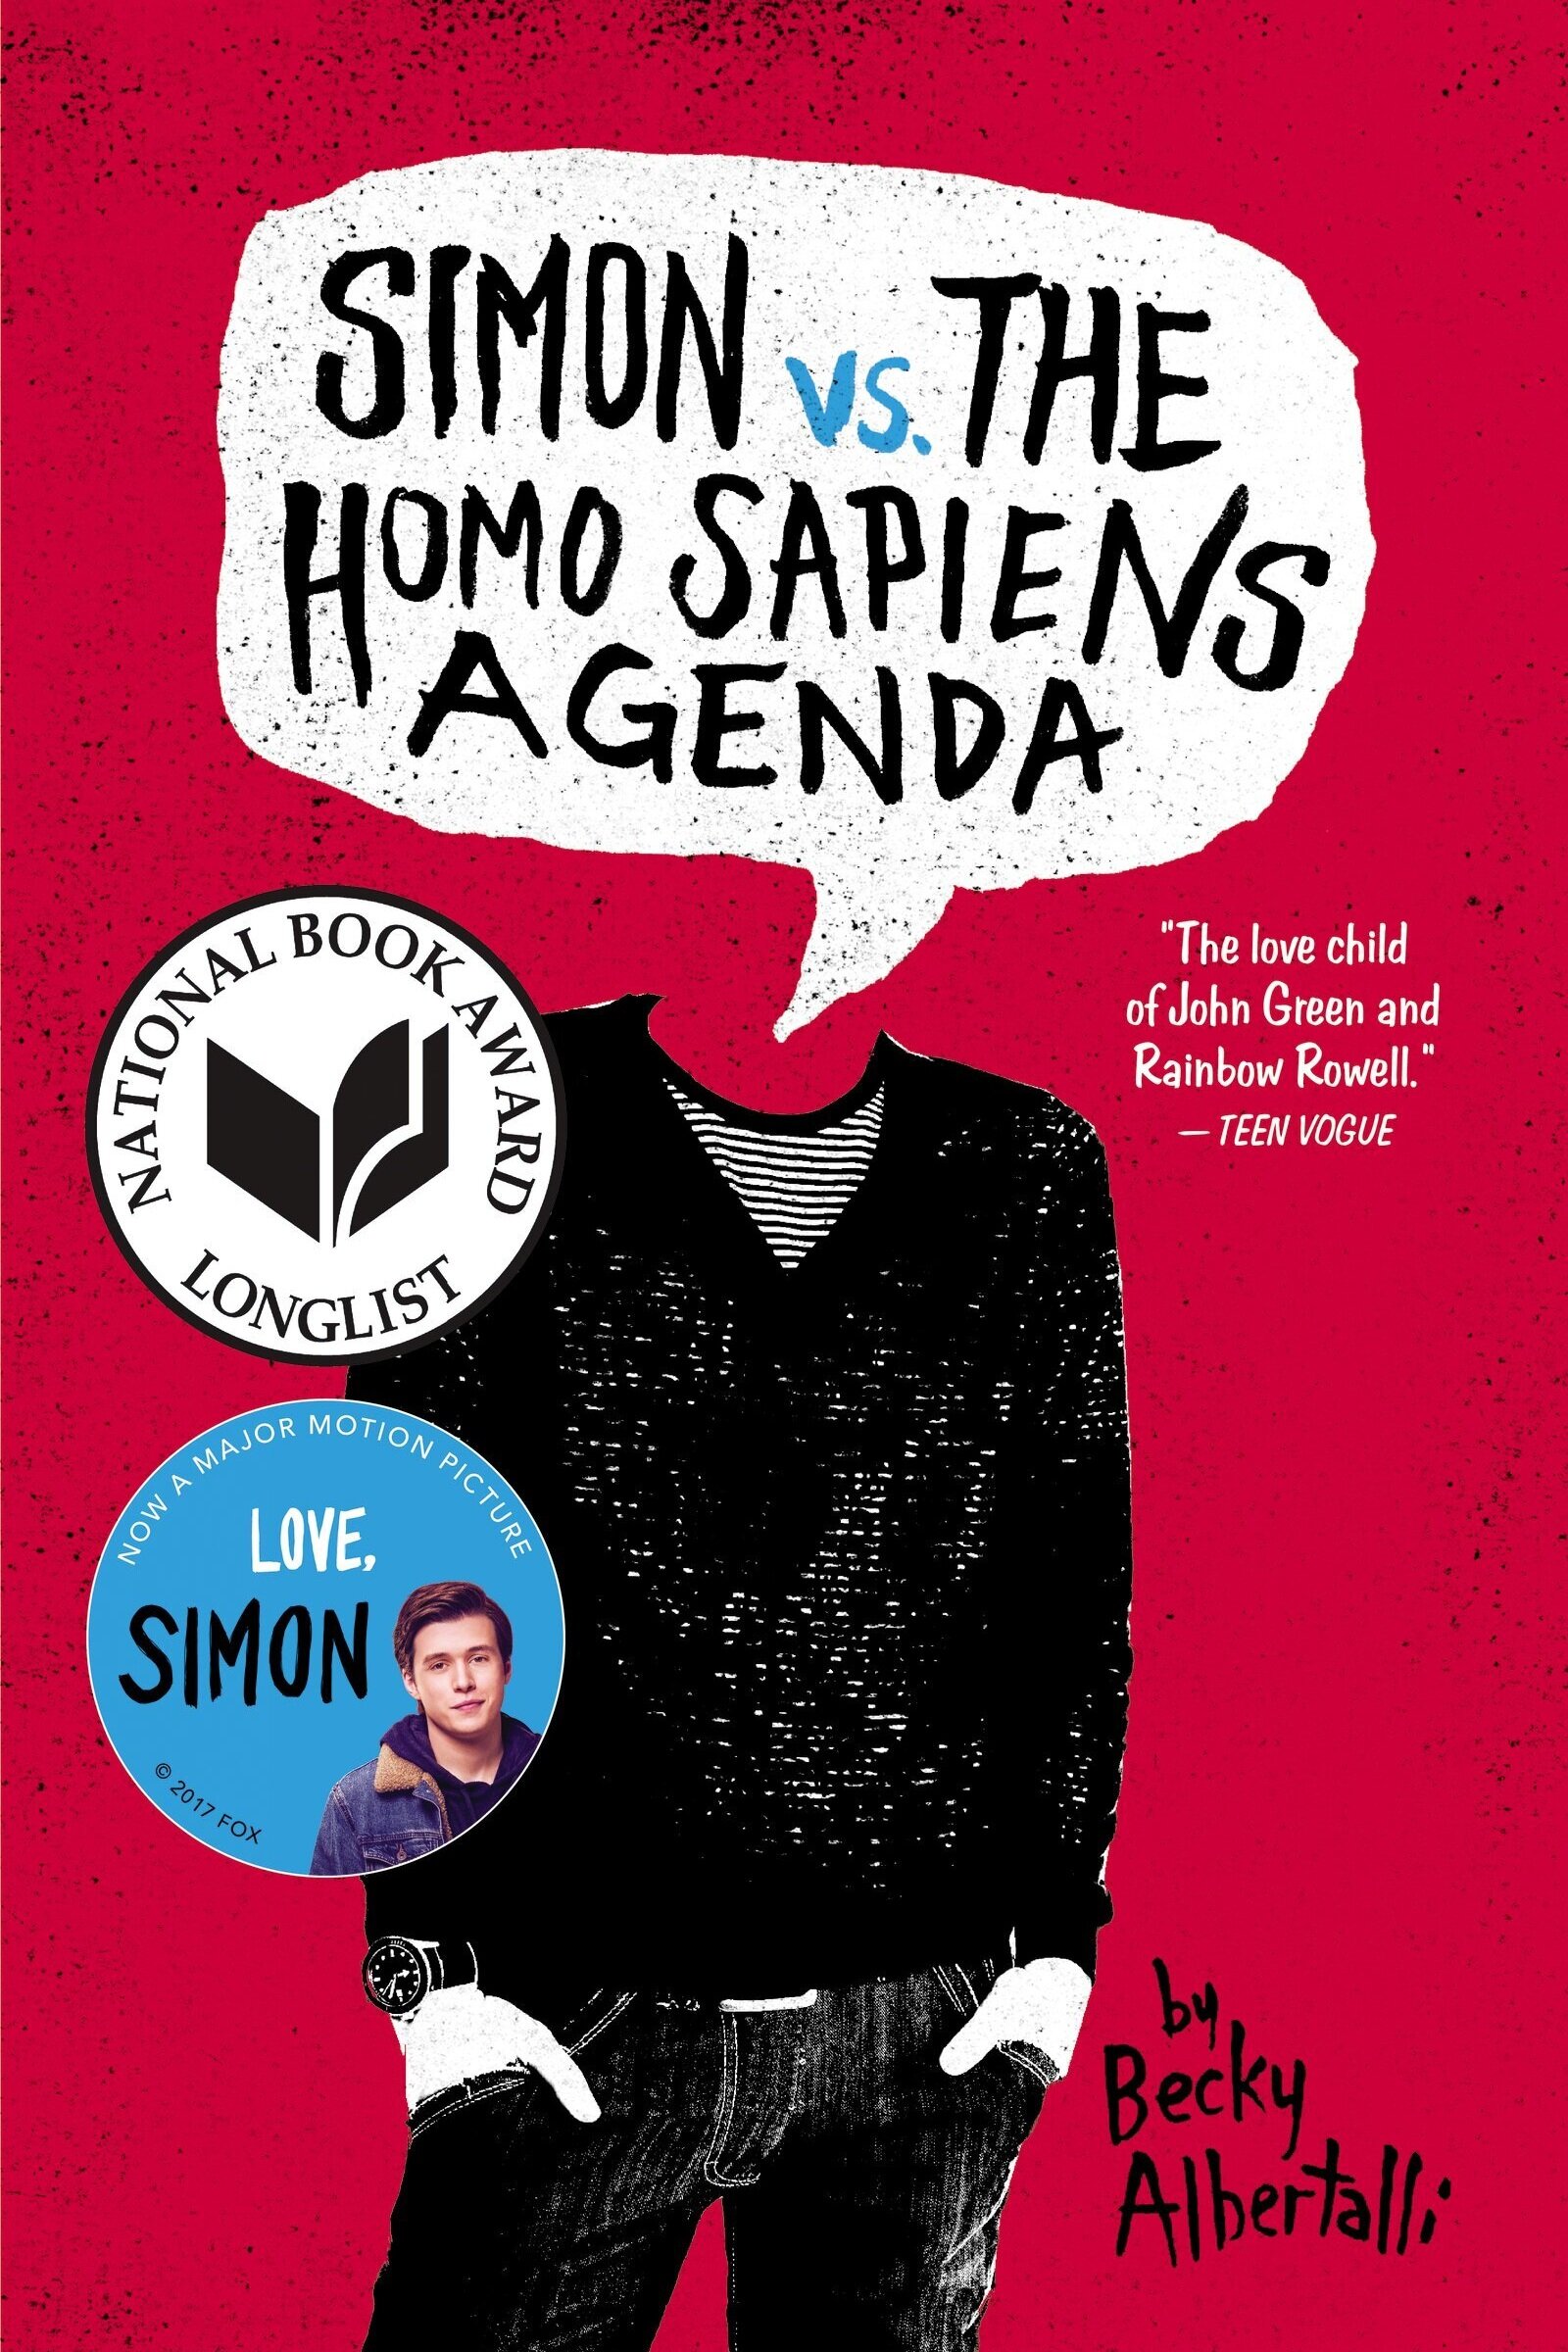 Simon and the Homo Sapians Agenda